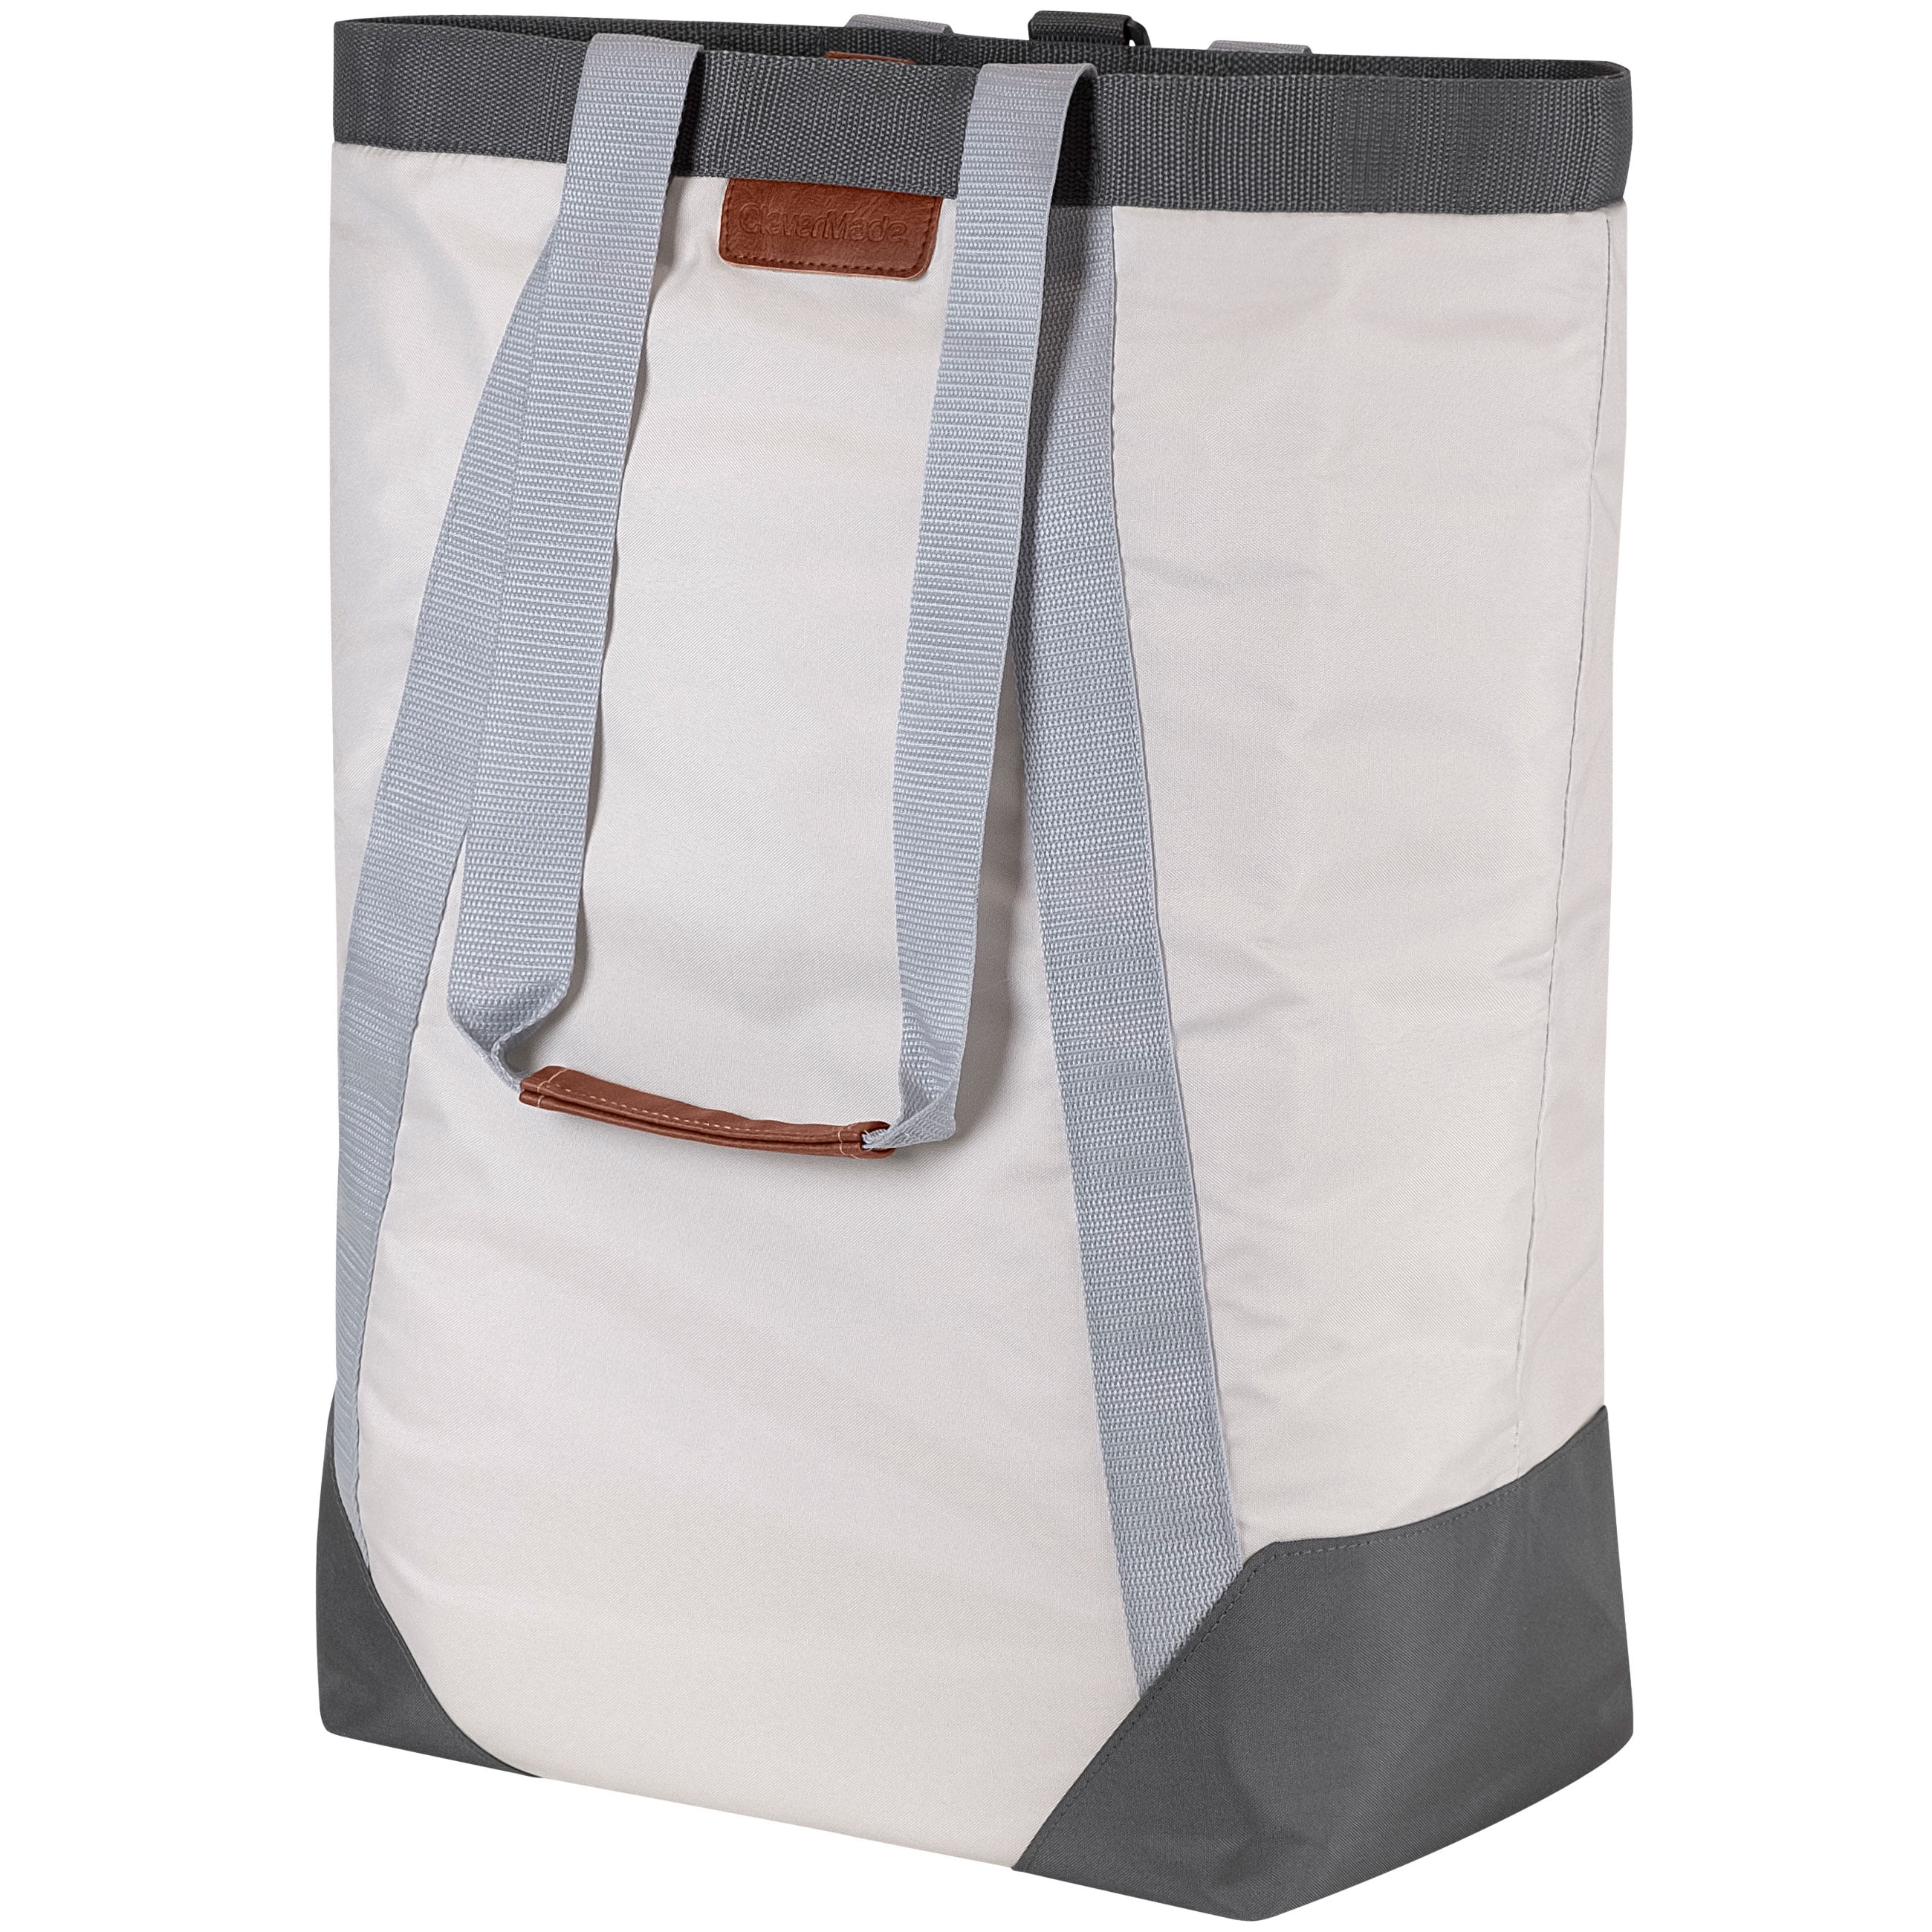 UCF Laundry Bags BEST University of Central Florida Clothes Bag w/SHOULDER STRAP 